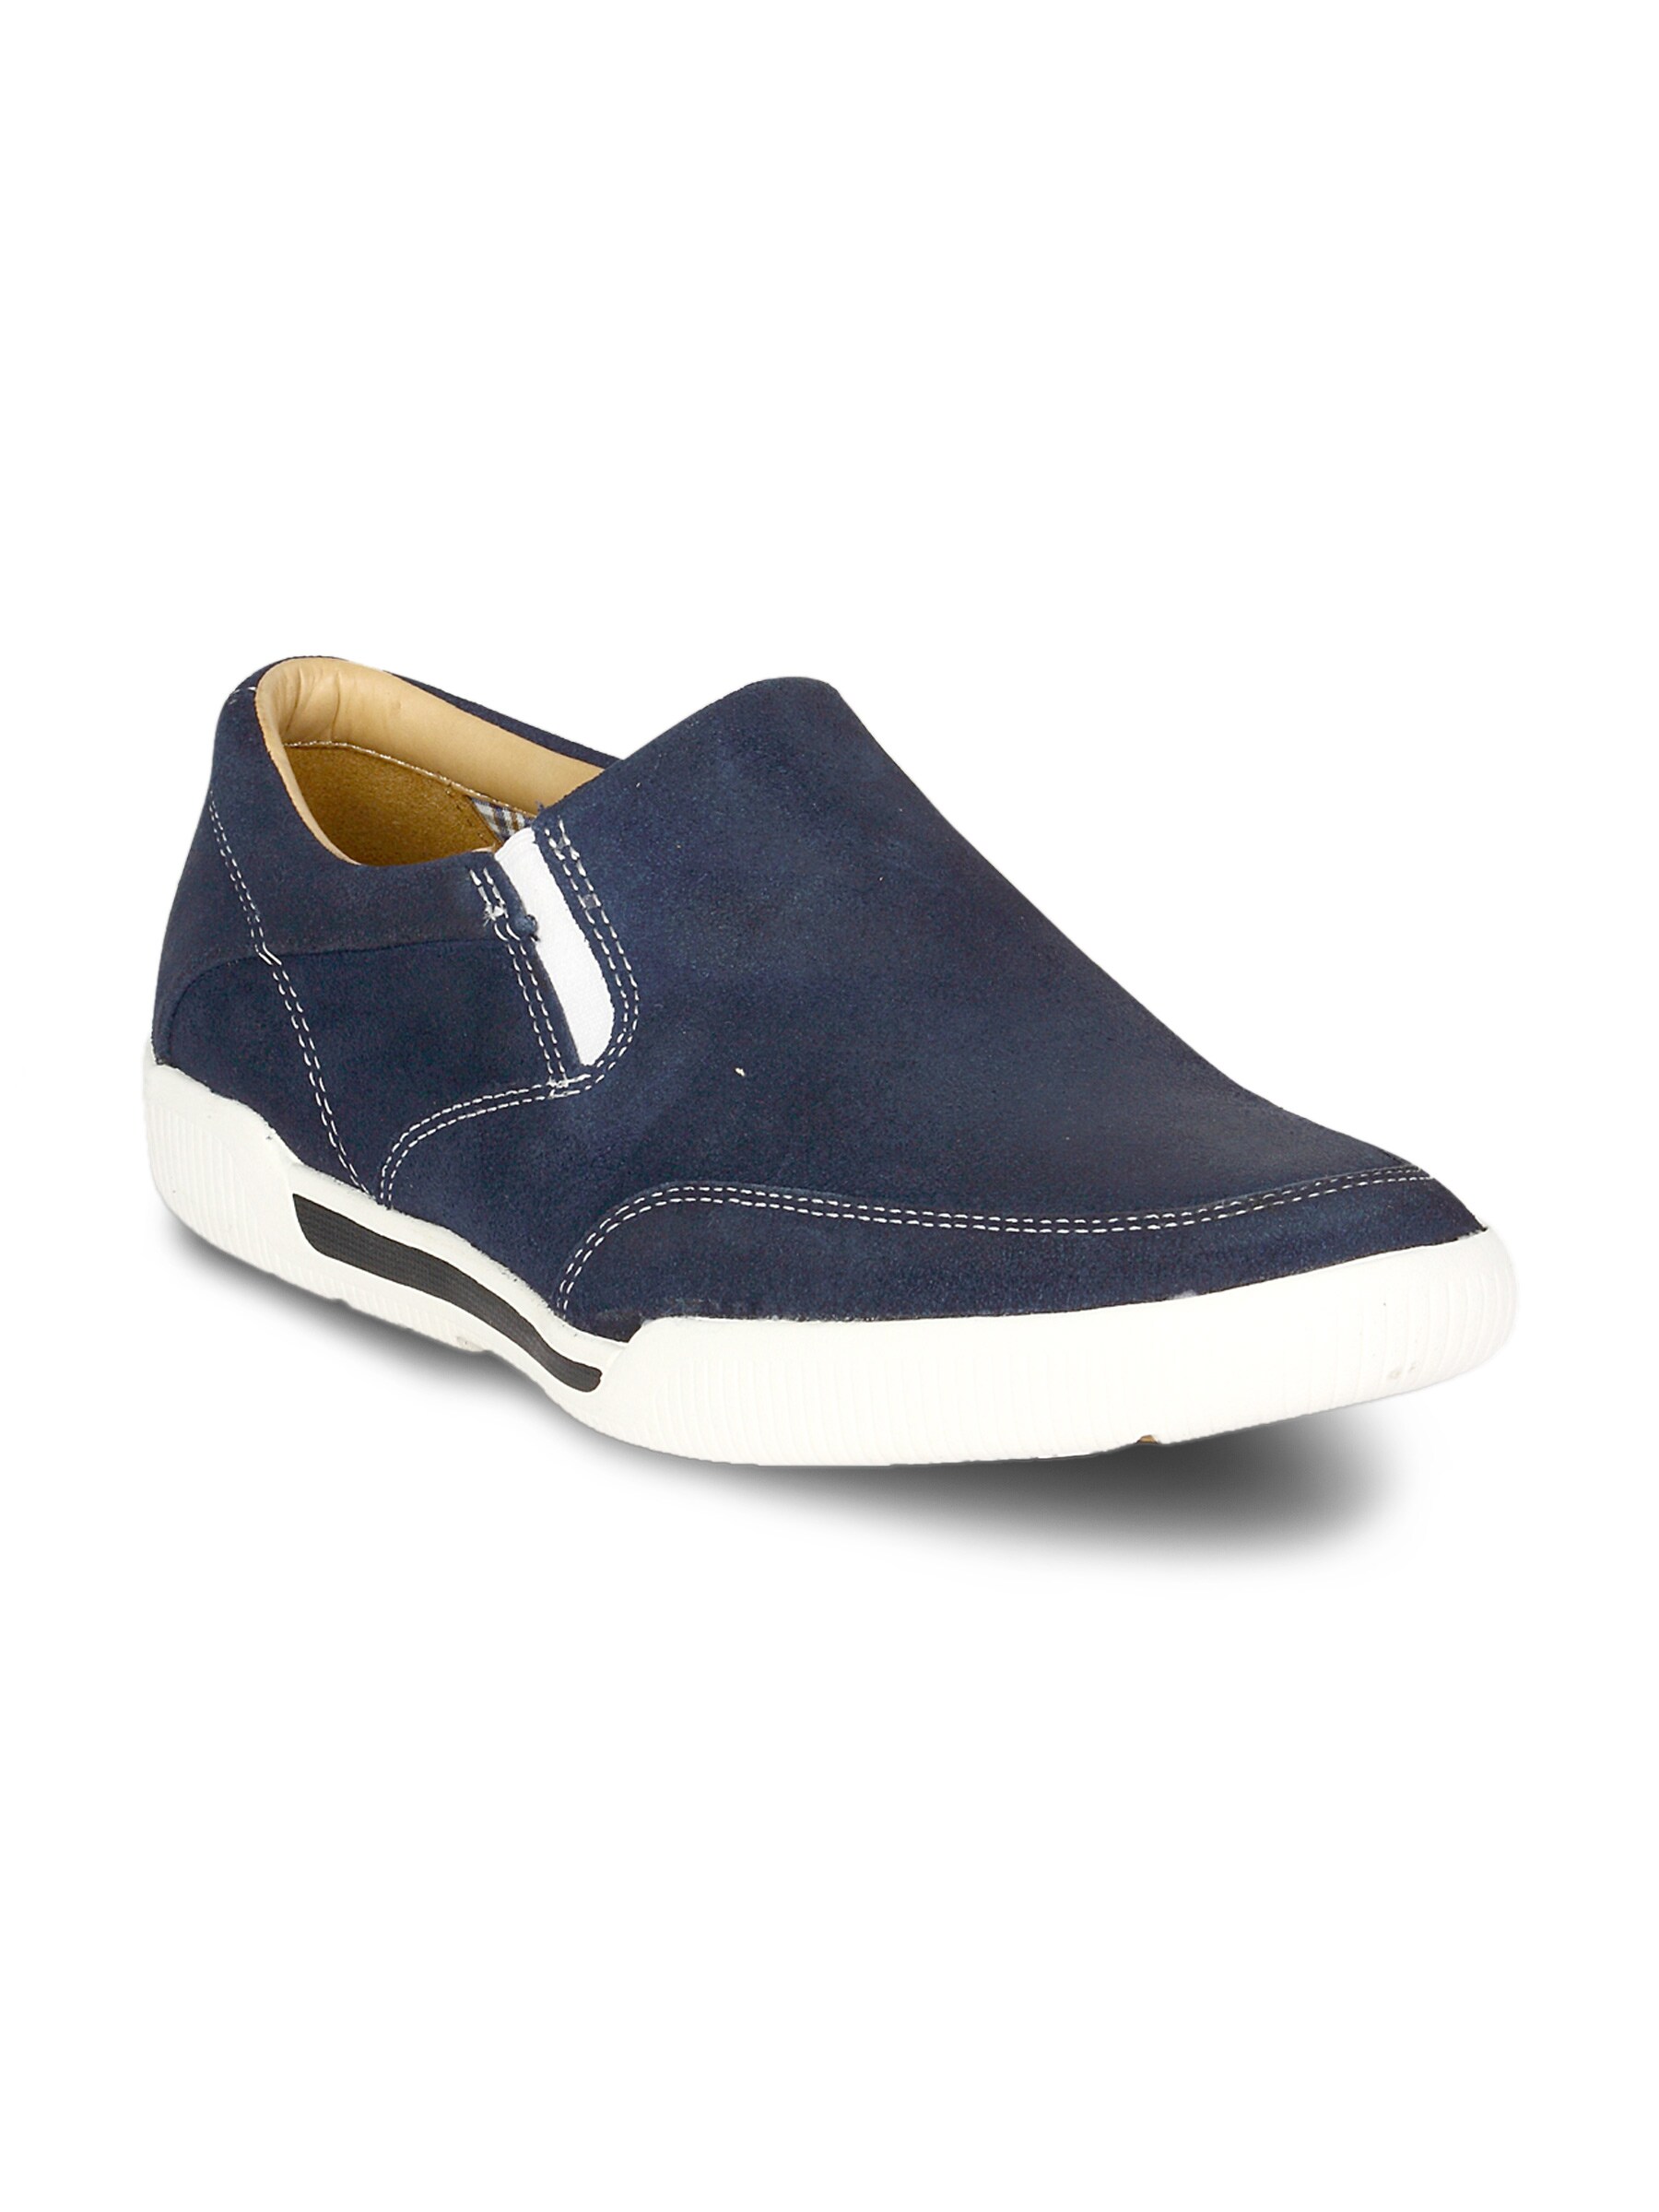 Rockport Men's Capella Navy Blue Shoe